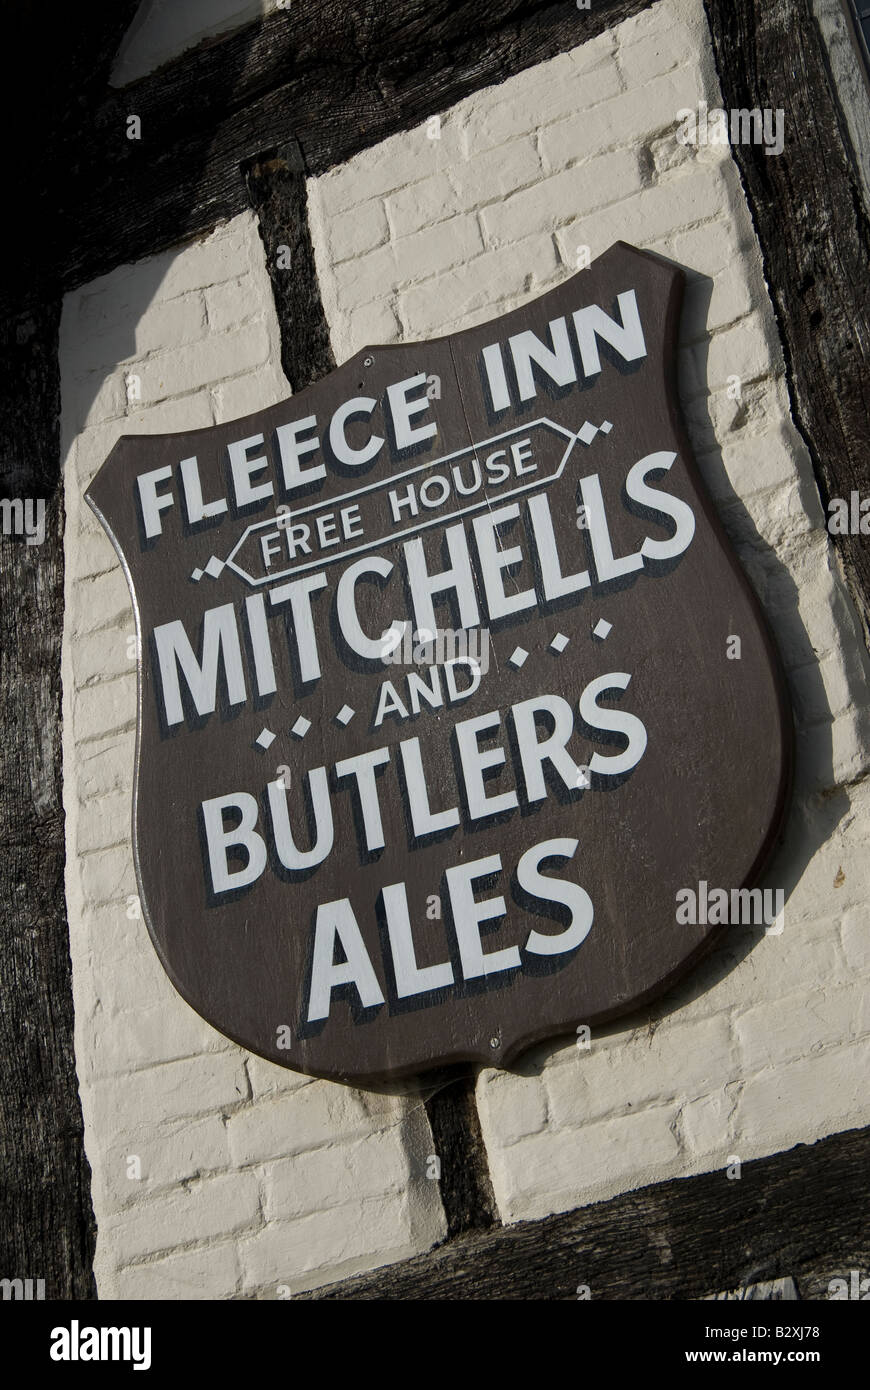 Mitchells and Butler Ales sign at the National Trust run Fleece Inn, Bretforton, UK. Stock Photo